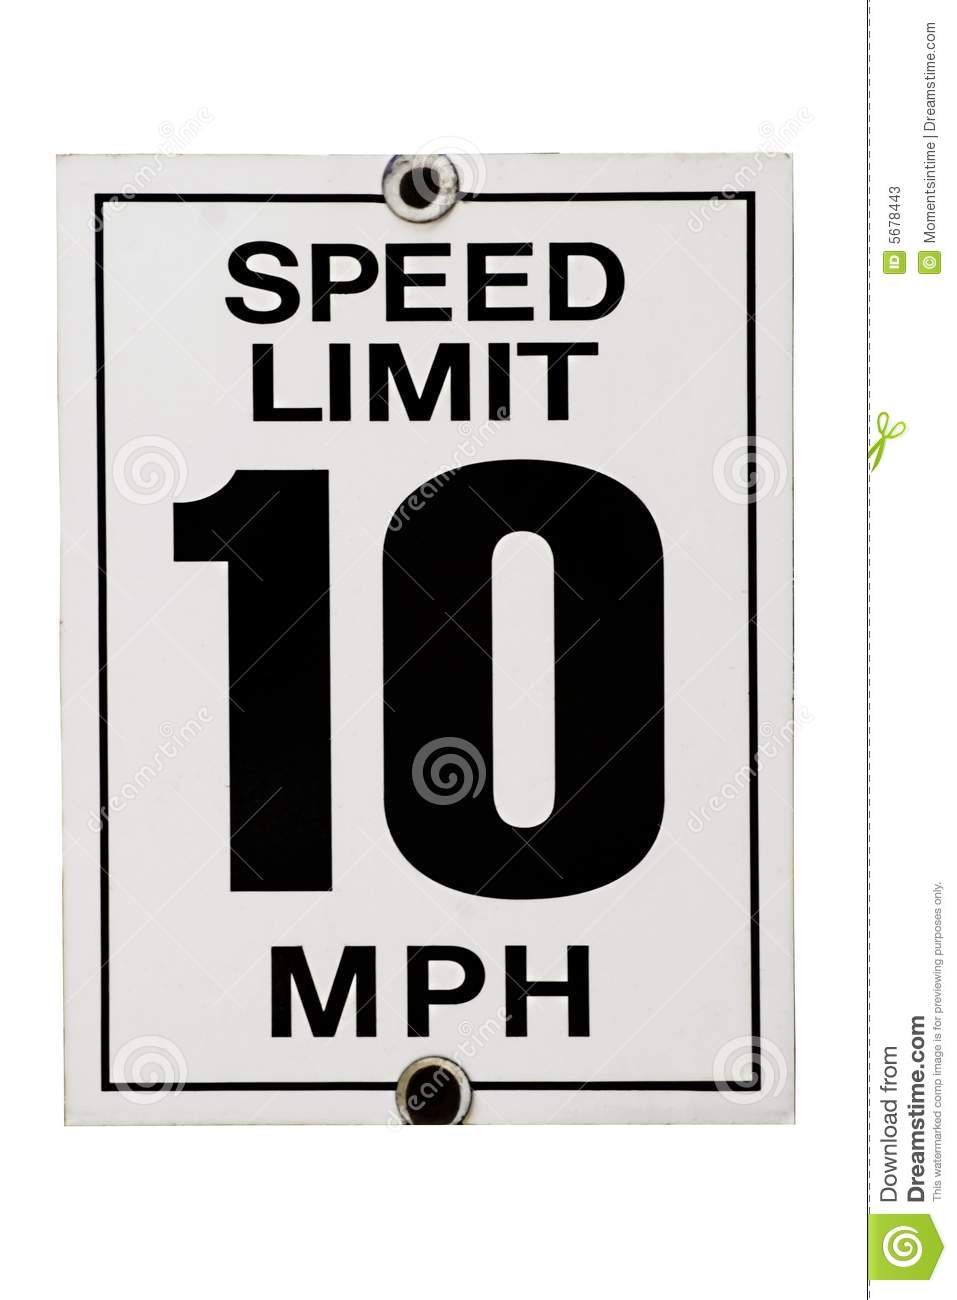 Speed Limit Stock Photos   Image  5678443